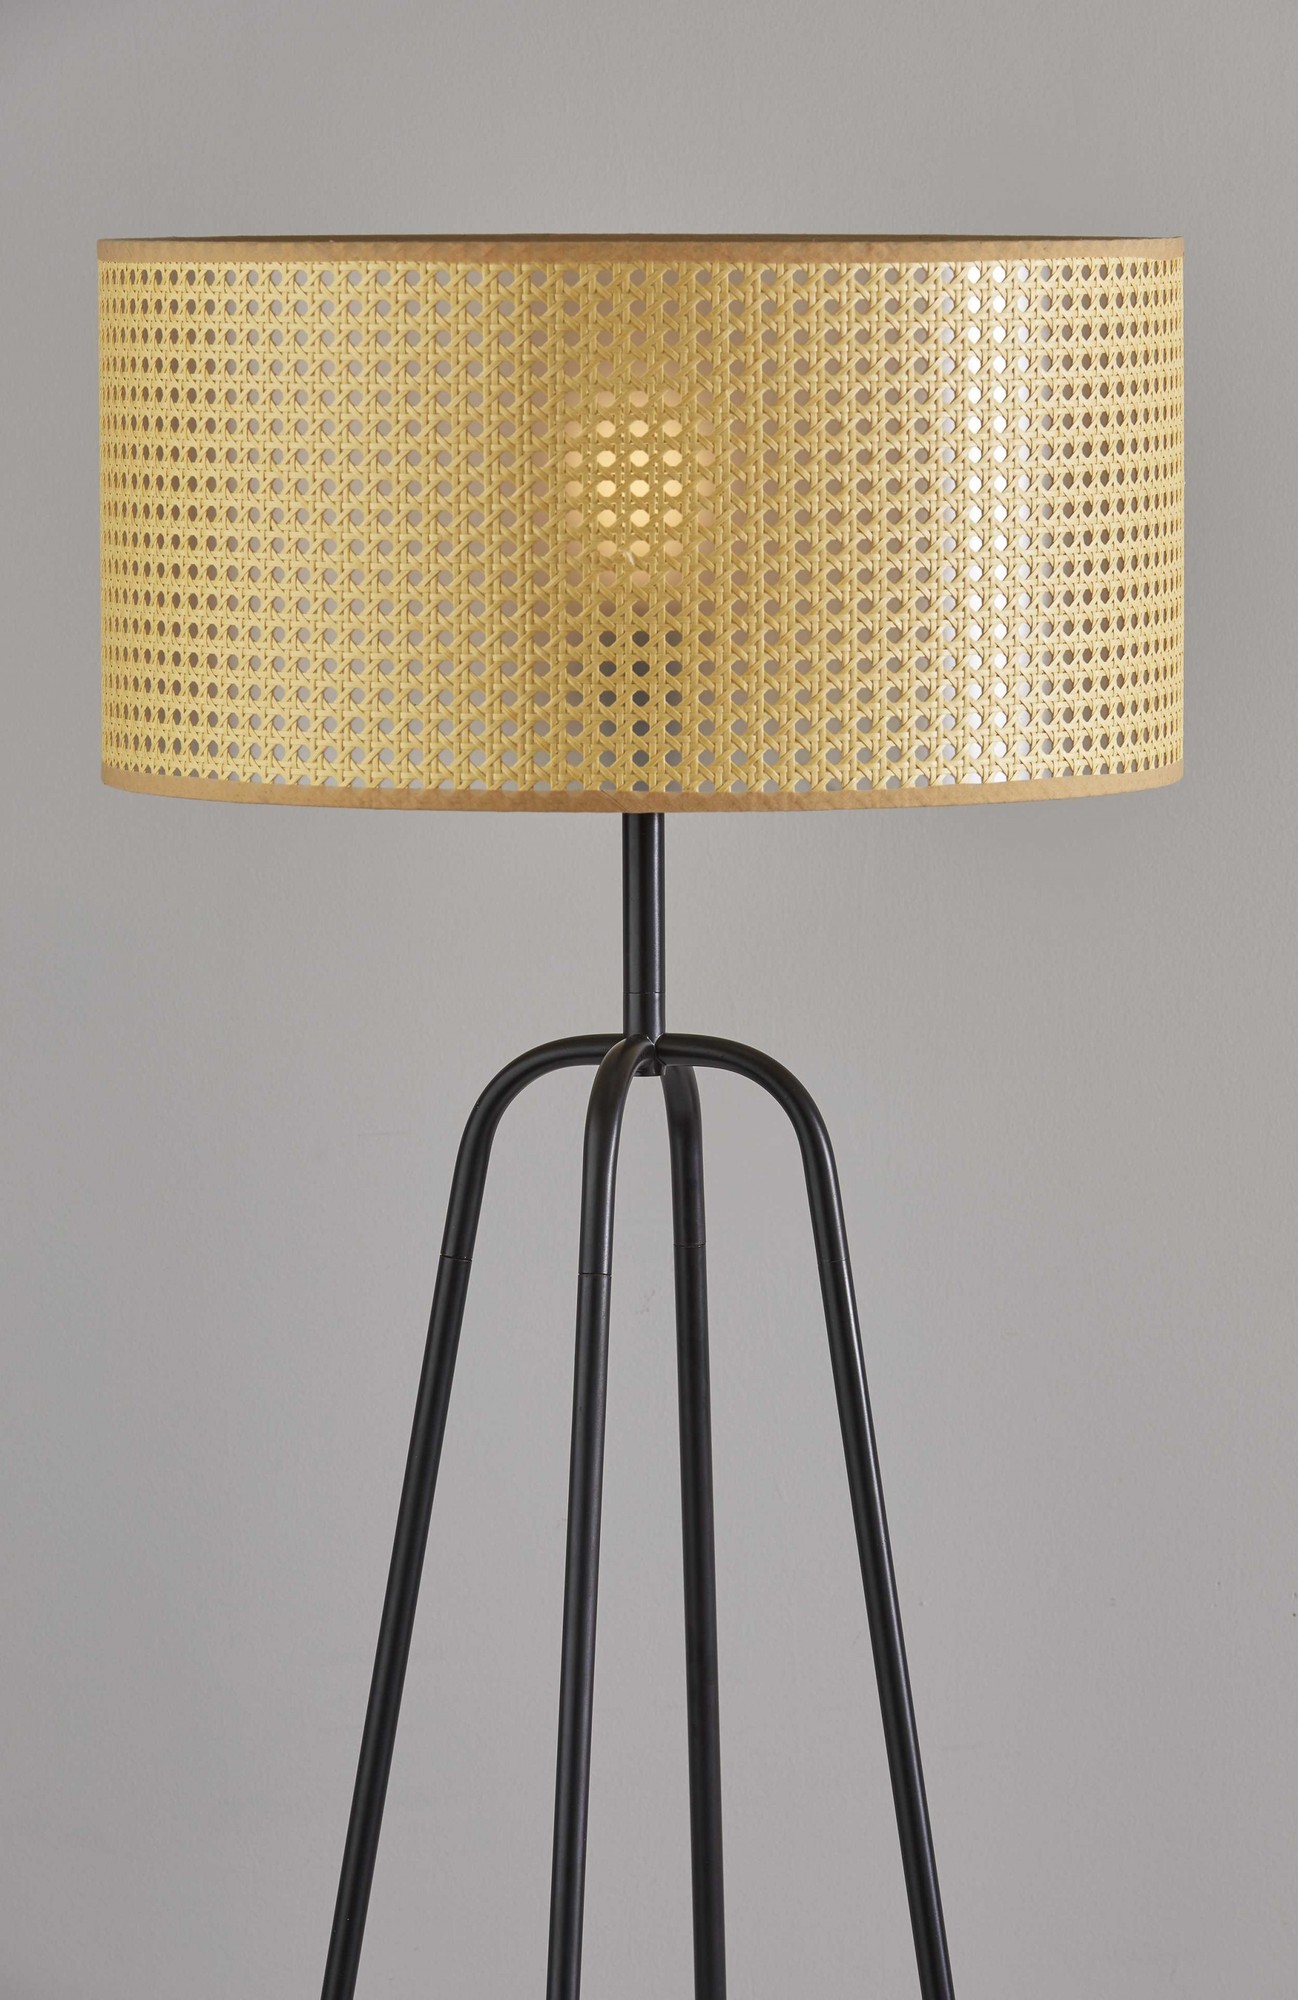 13" X 13" X 25" Bronze Shade Table Lamp